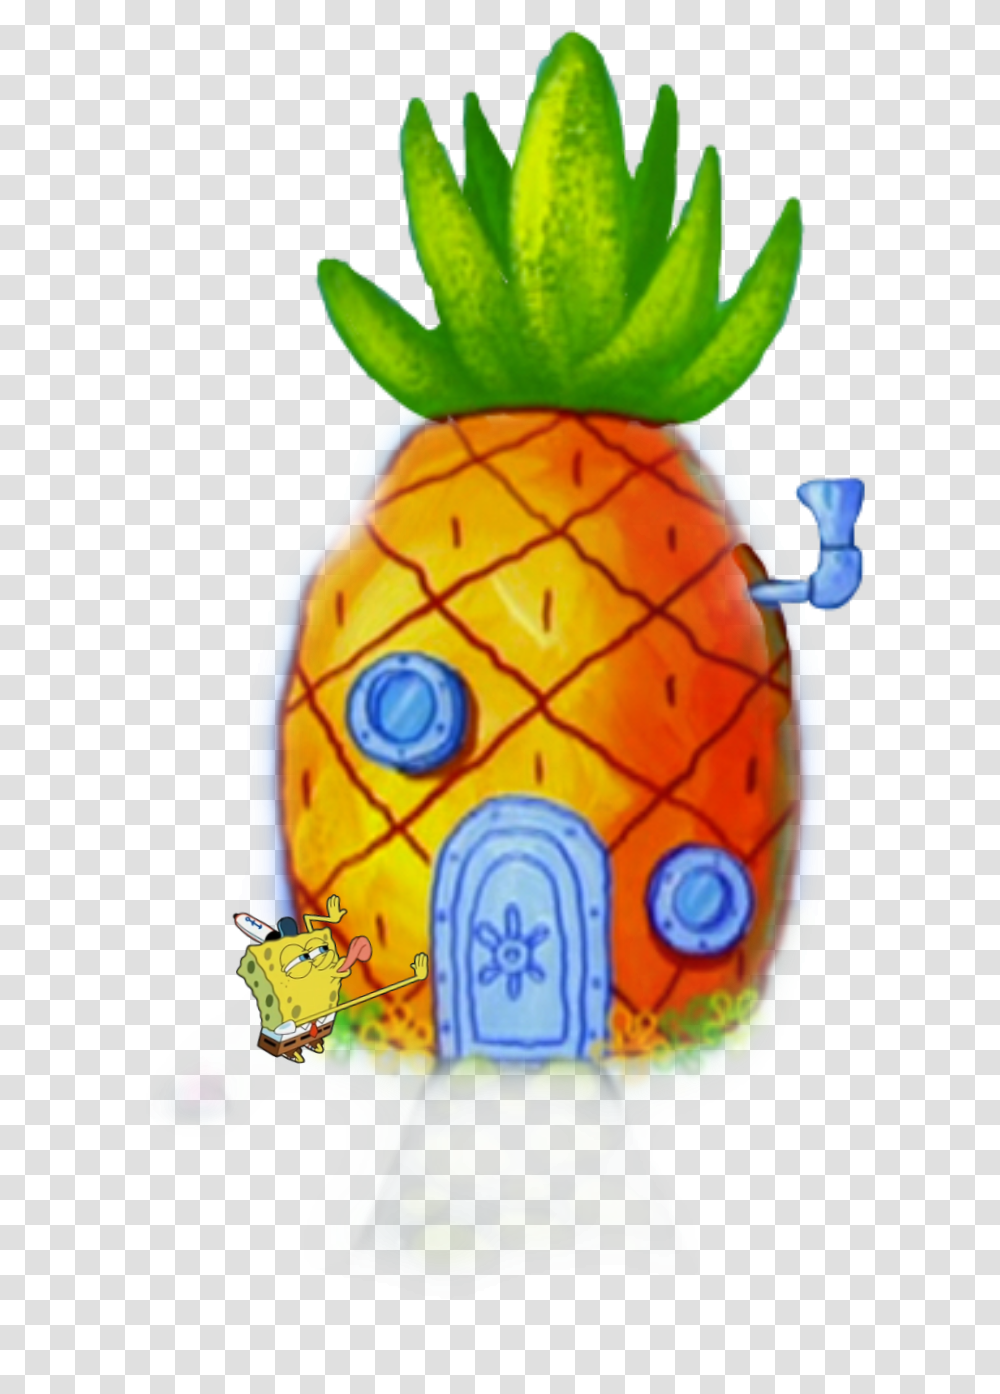 Pineapple Spongebob Homesweethome Casa Do Bob Esponja, Food, Plant, Egg, Sweets Transparent Png